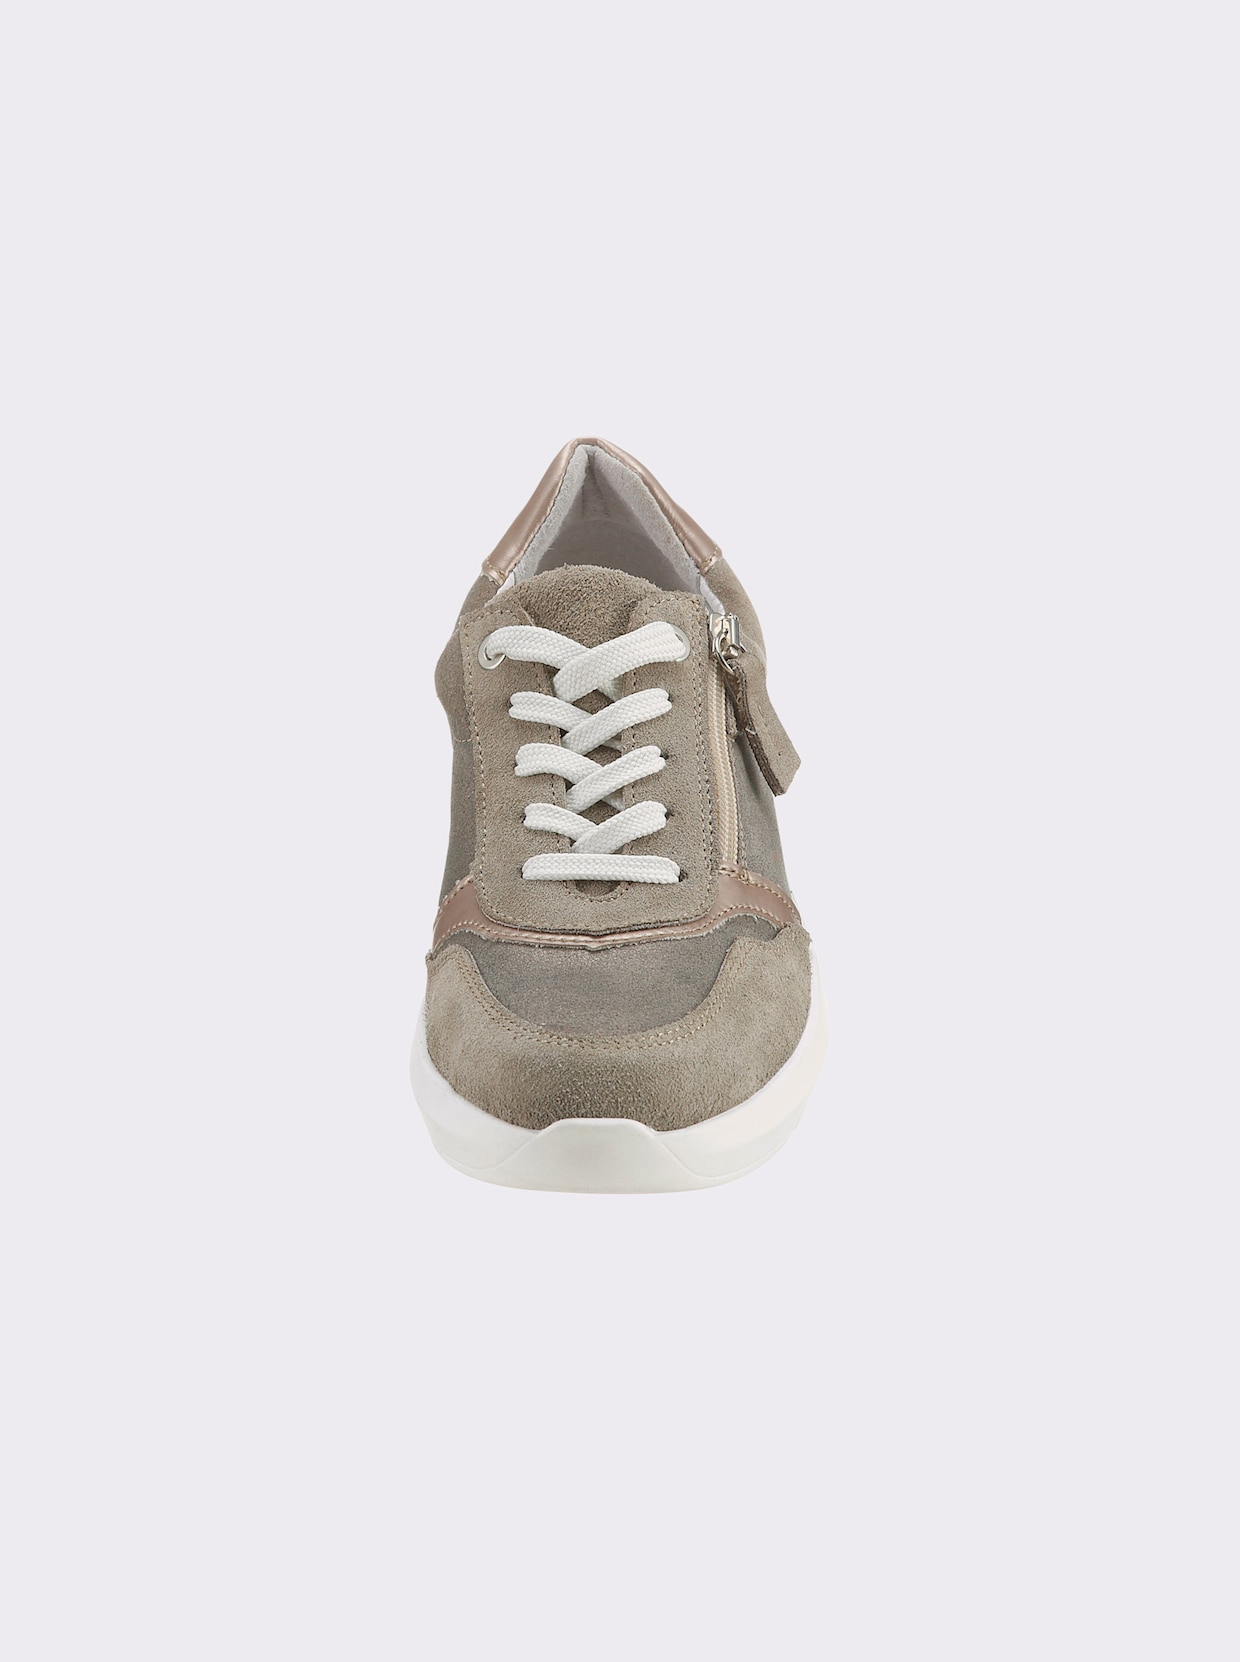 airsoft modern+ Sneaker - khaki